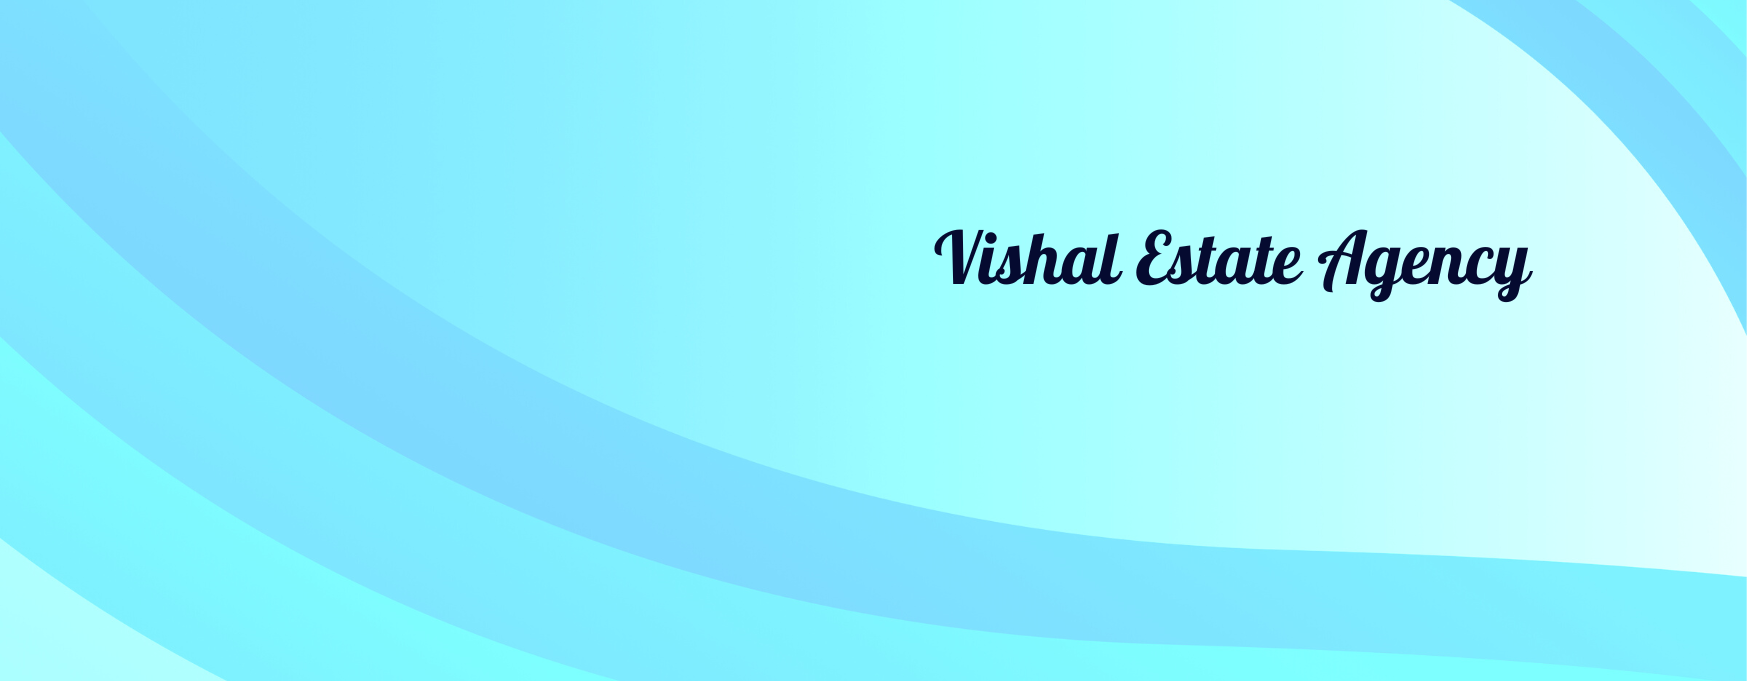 Vishal Estate Agency